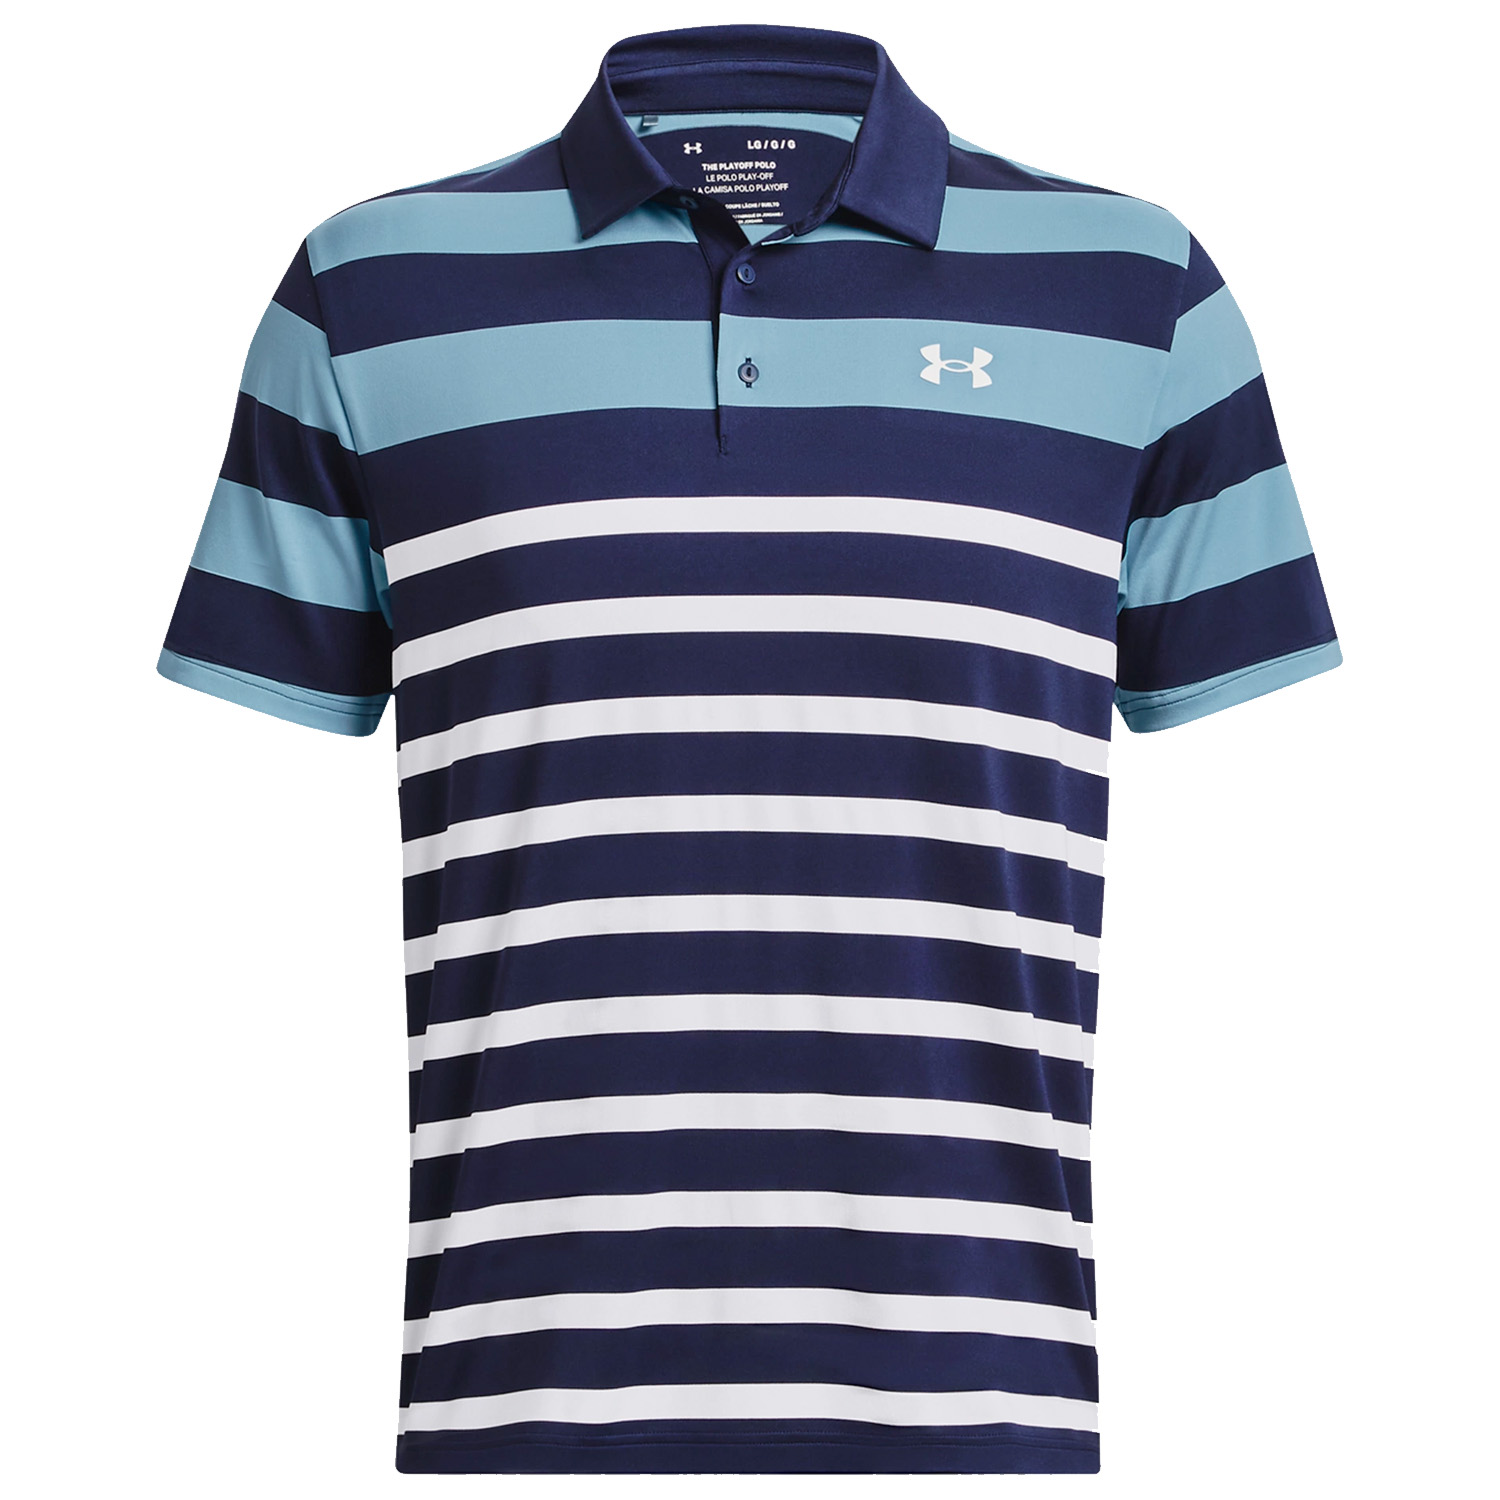 Under Armour Golf Playoff 3.0 Stripe Polo Shirt  - Midnight Navy/Blue/White